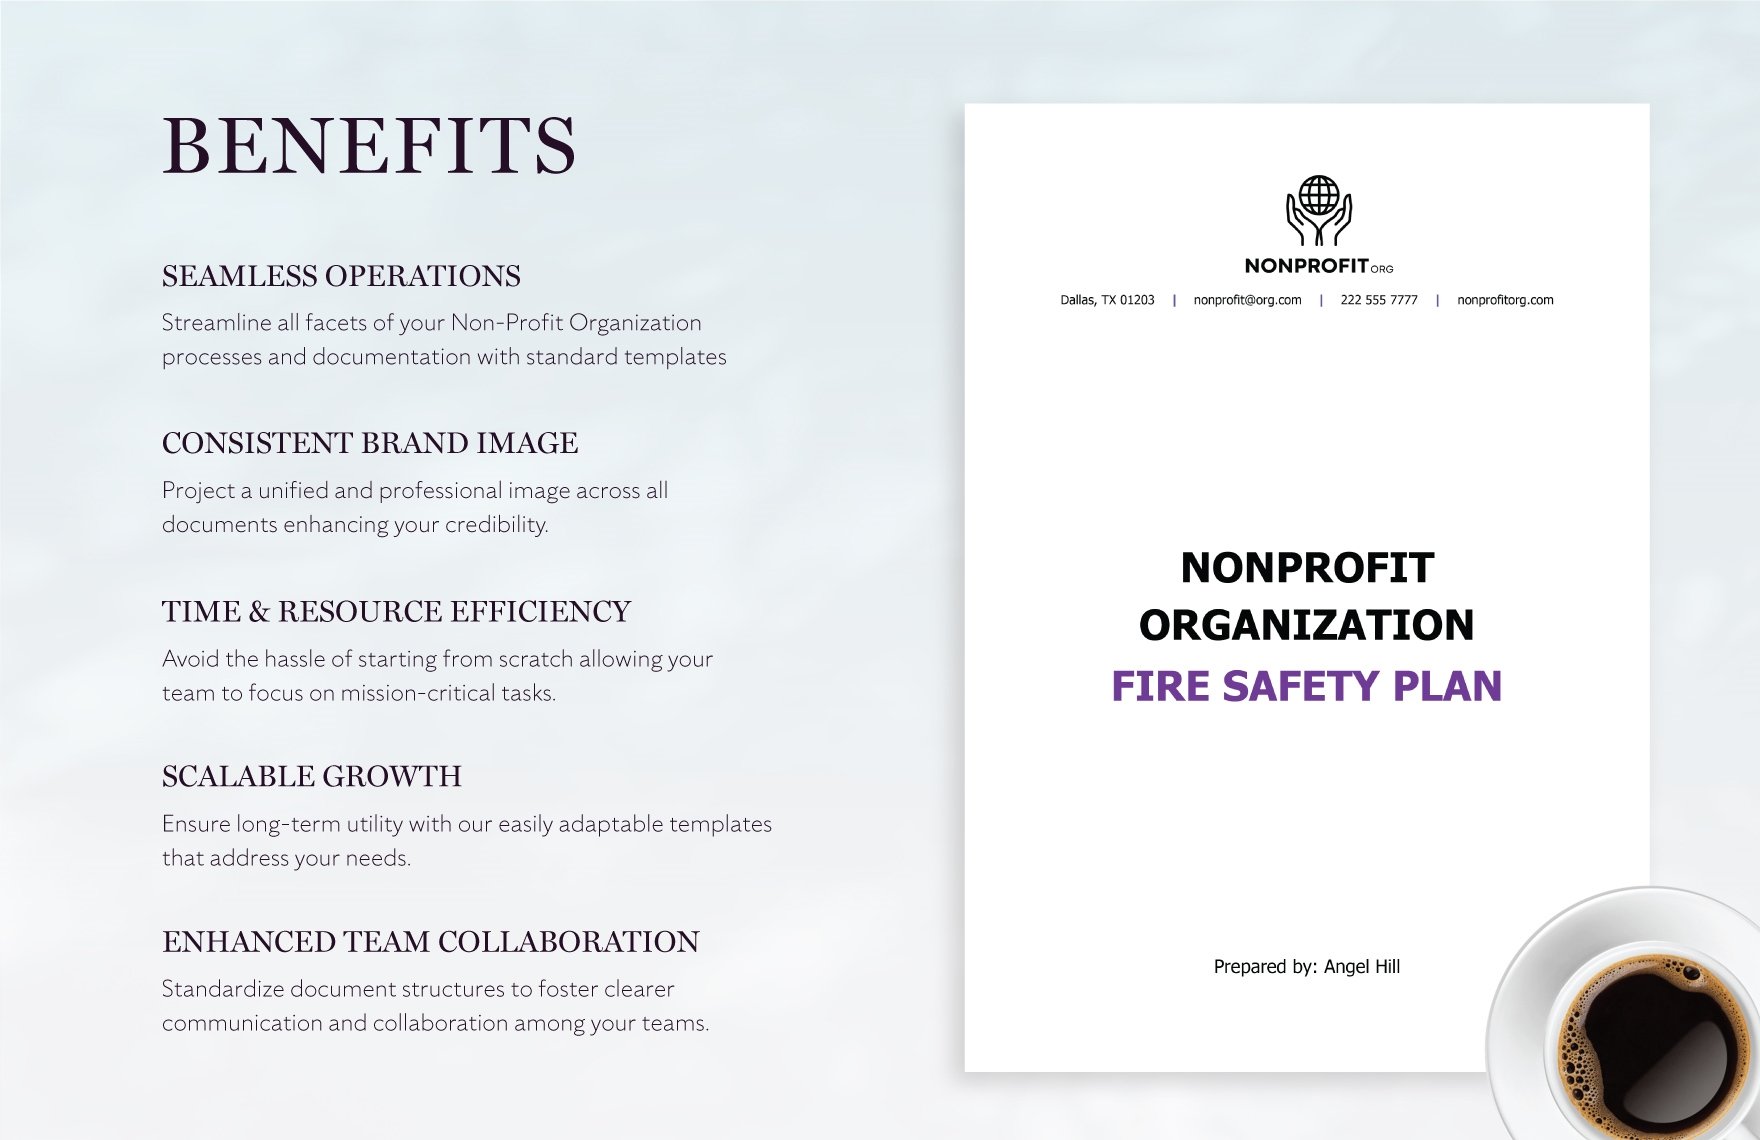 Nonprofit Organization Fire Safety Plan Template